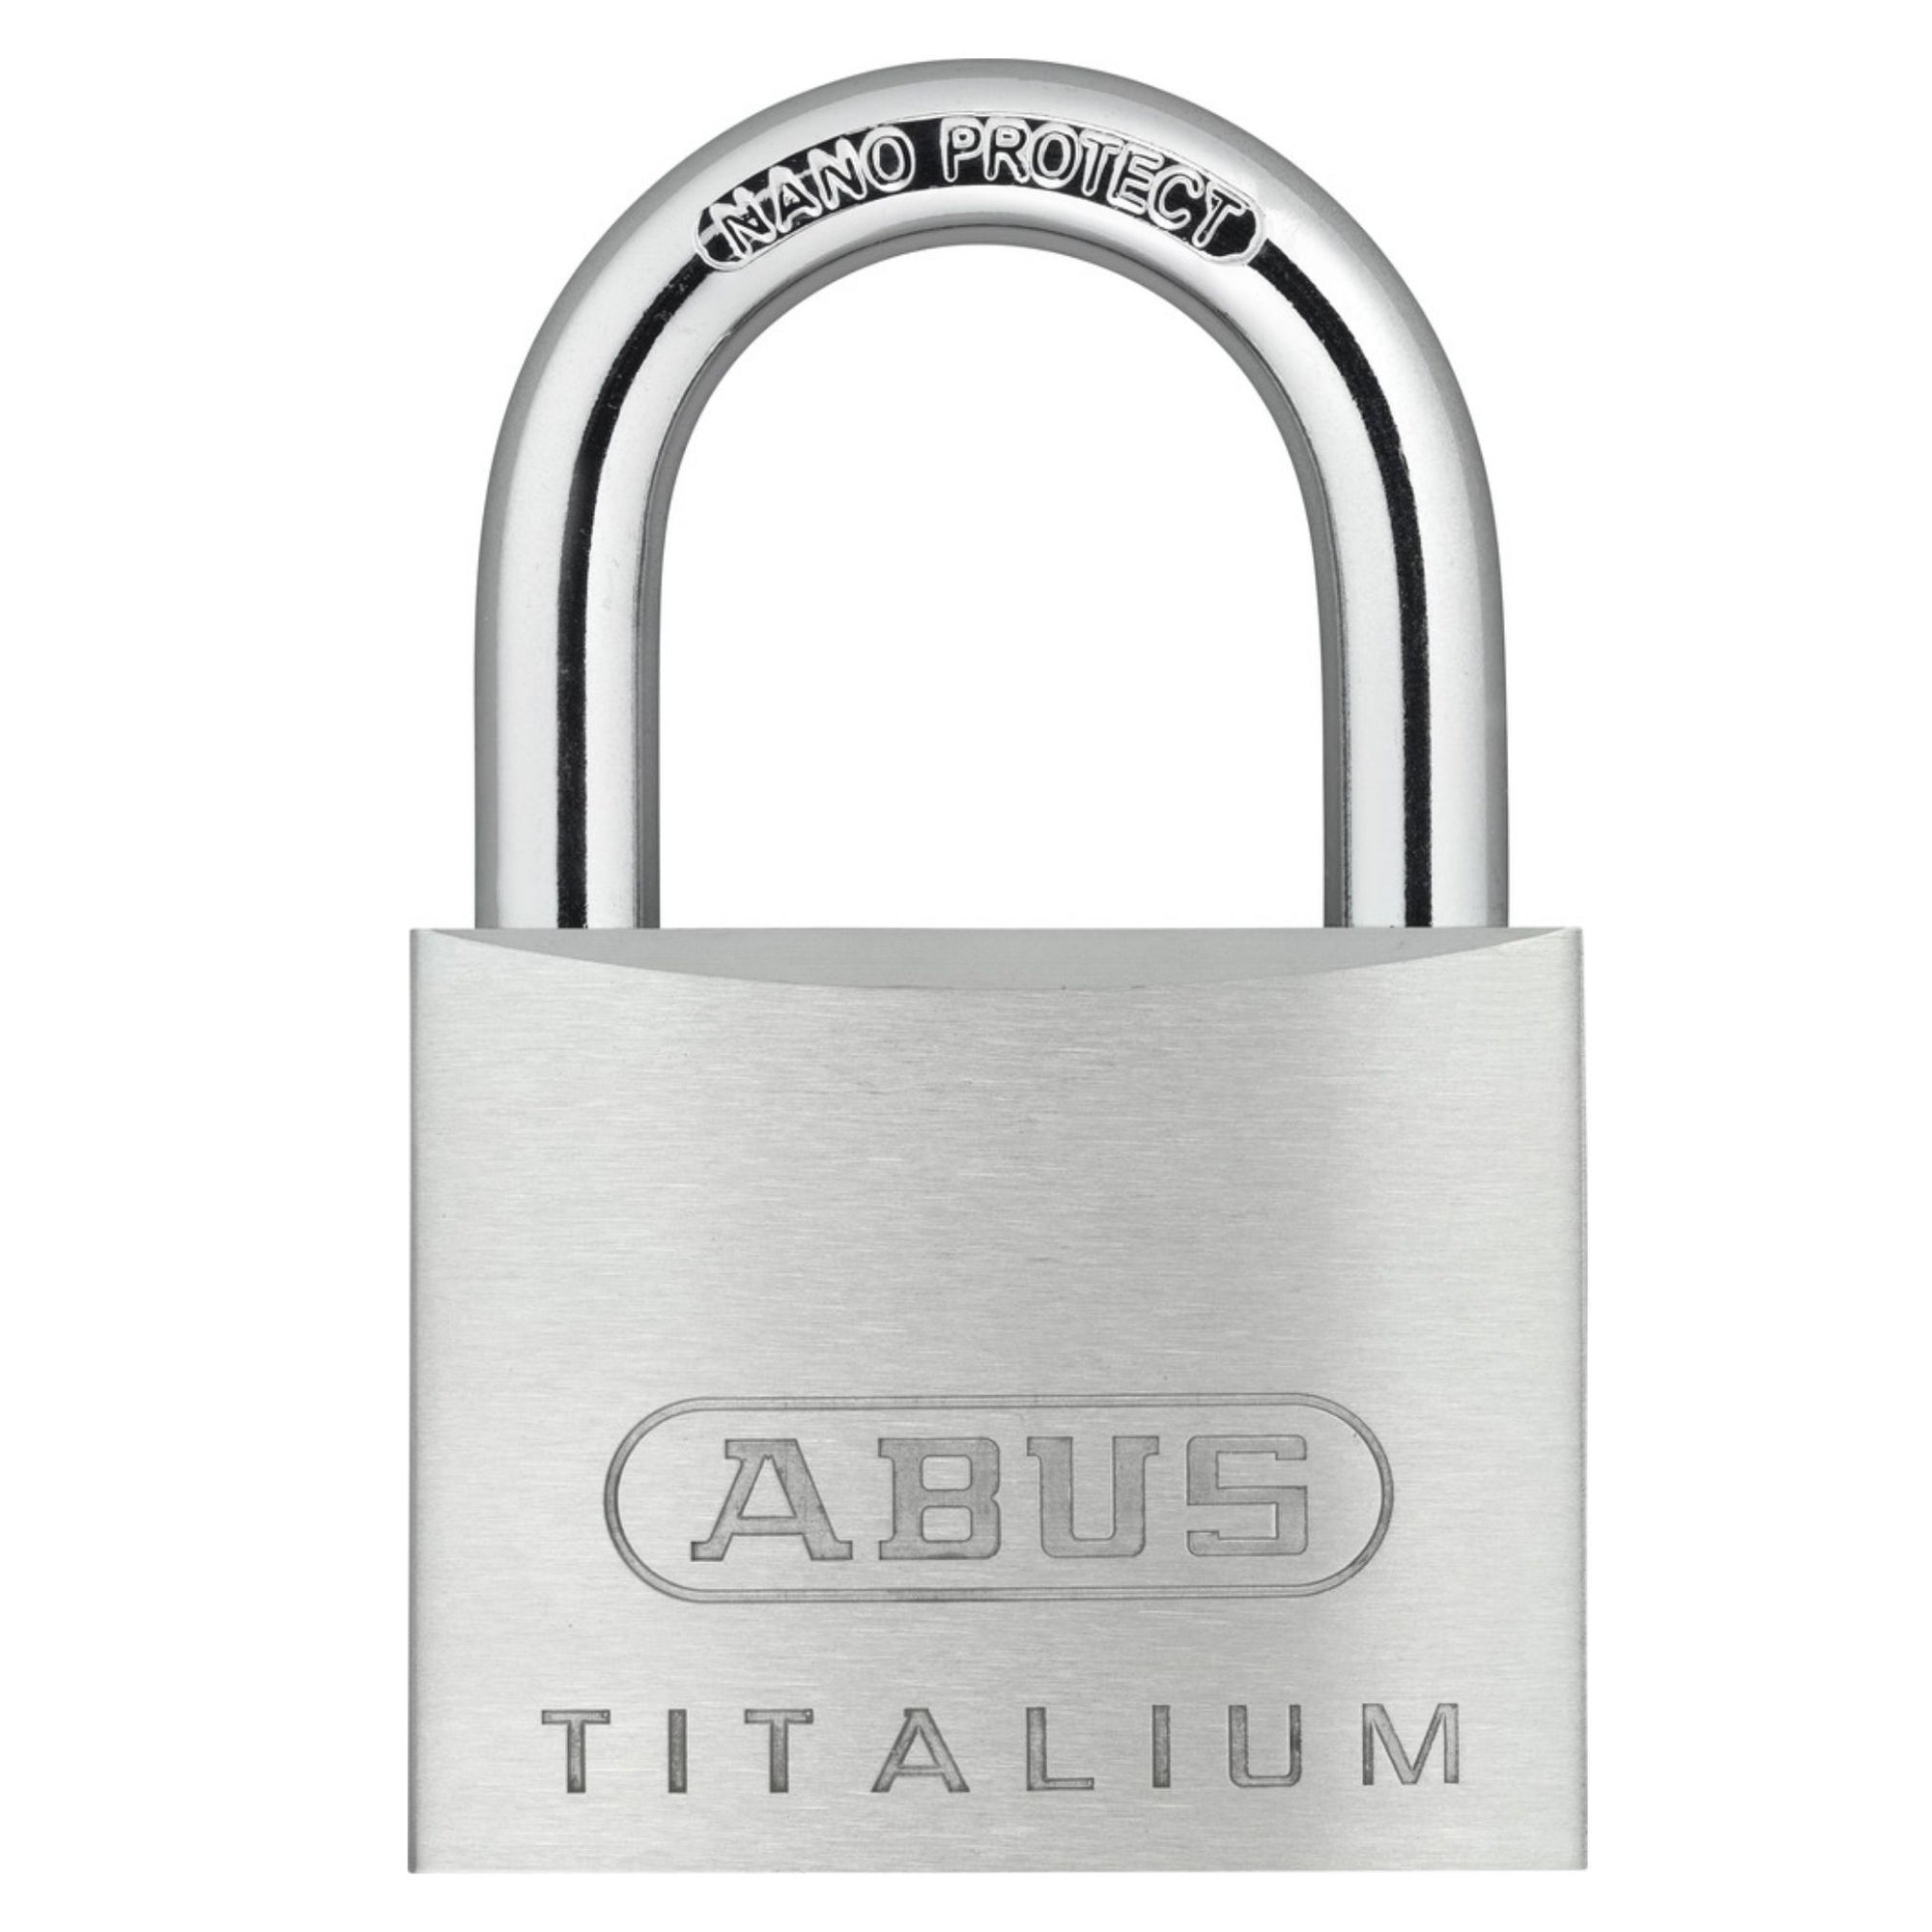 Abus 64TI/50 KA 6513 Titalium Lock Keyed Alike to Match Existing Key Number KA6513 - The Lock Source